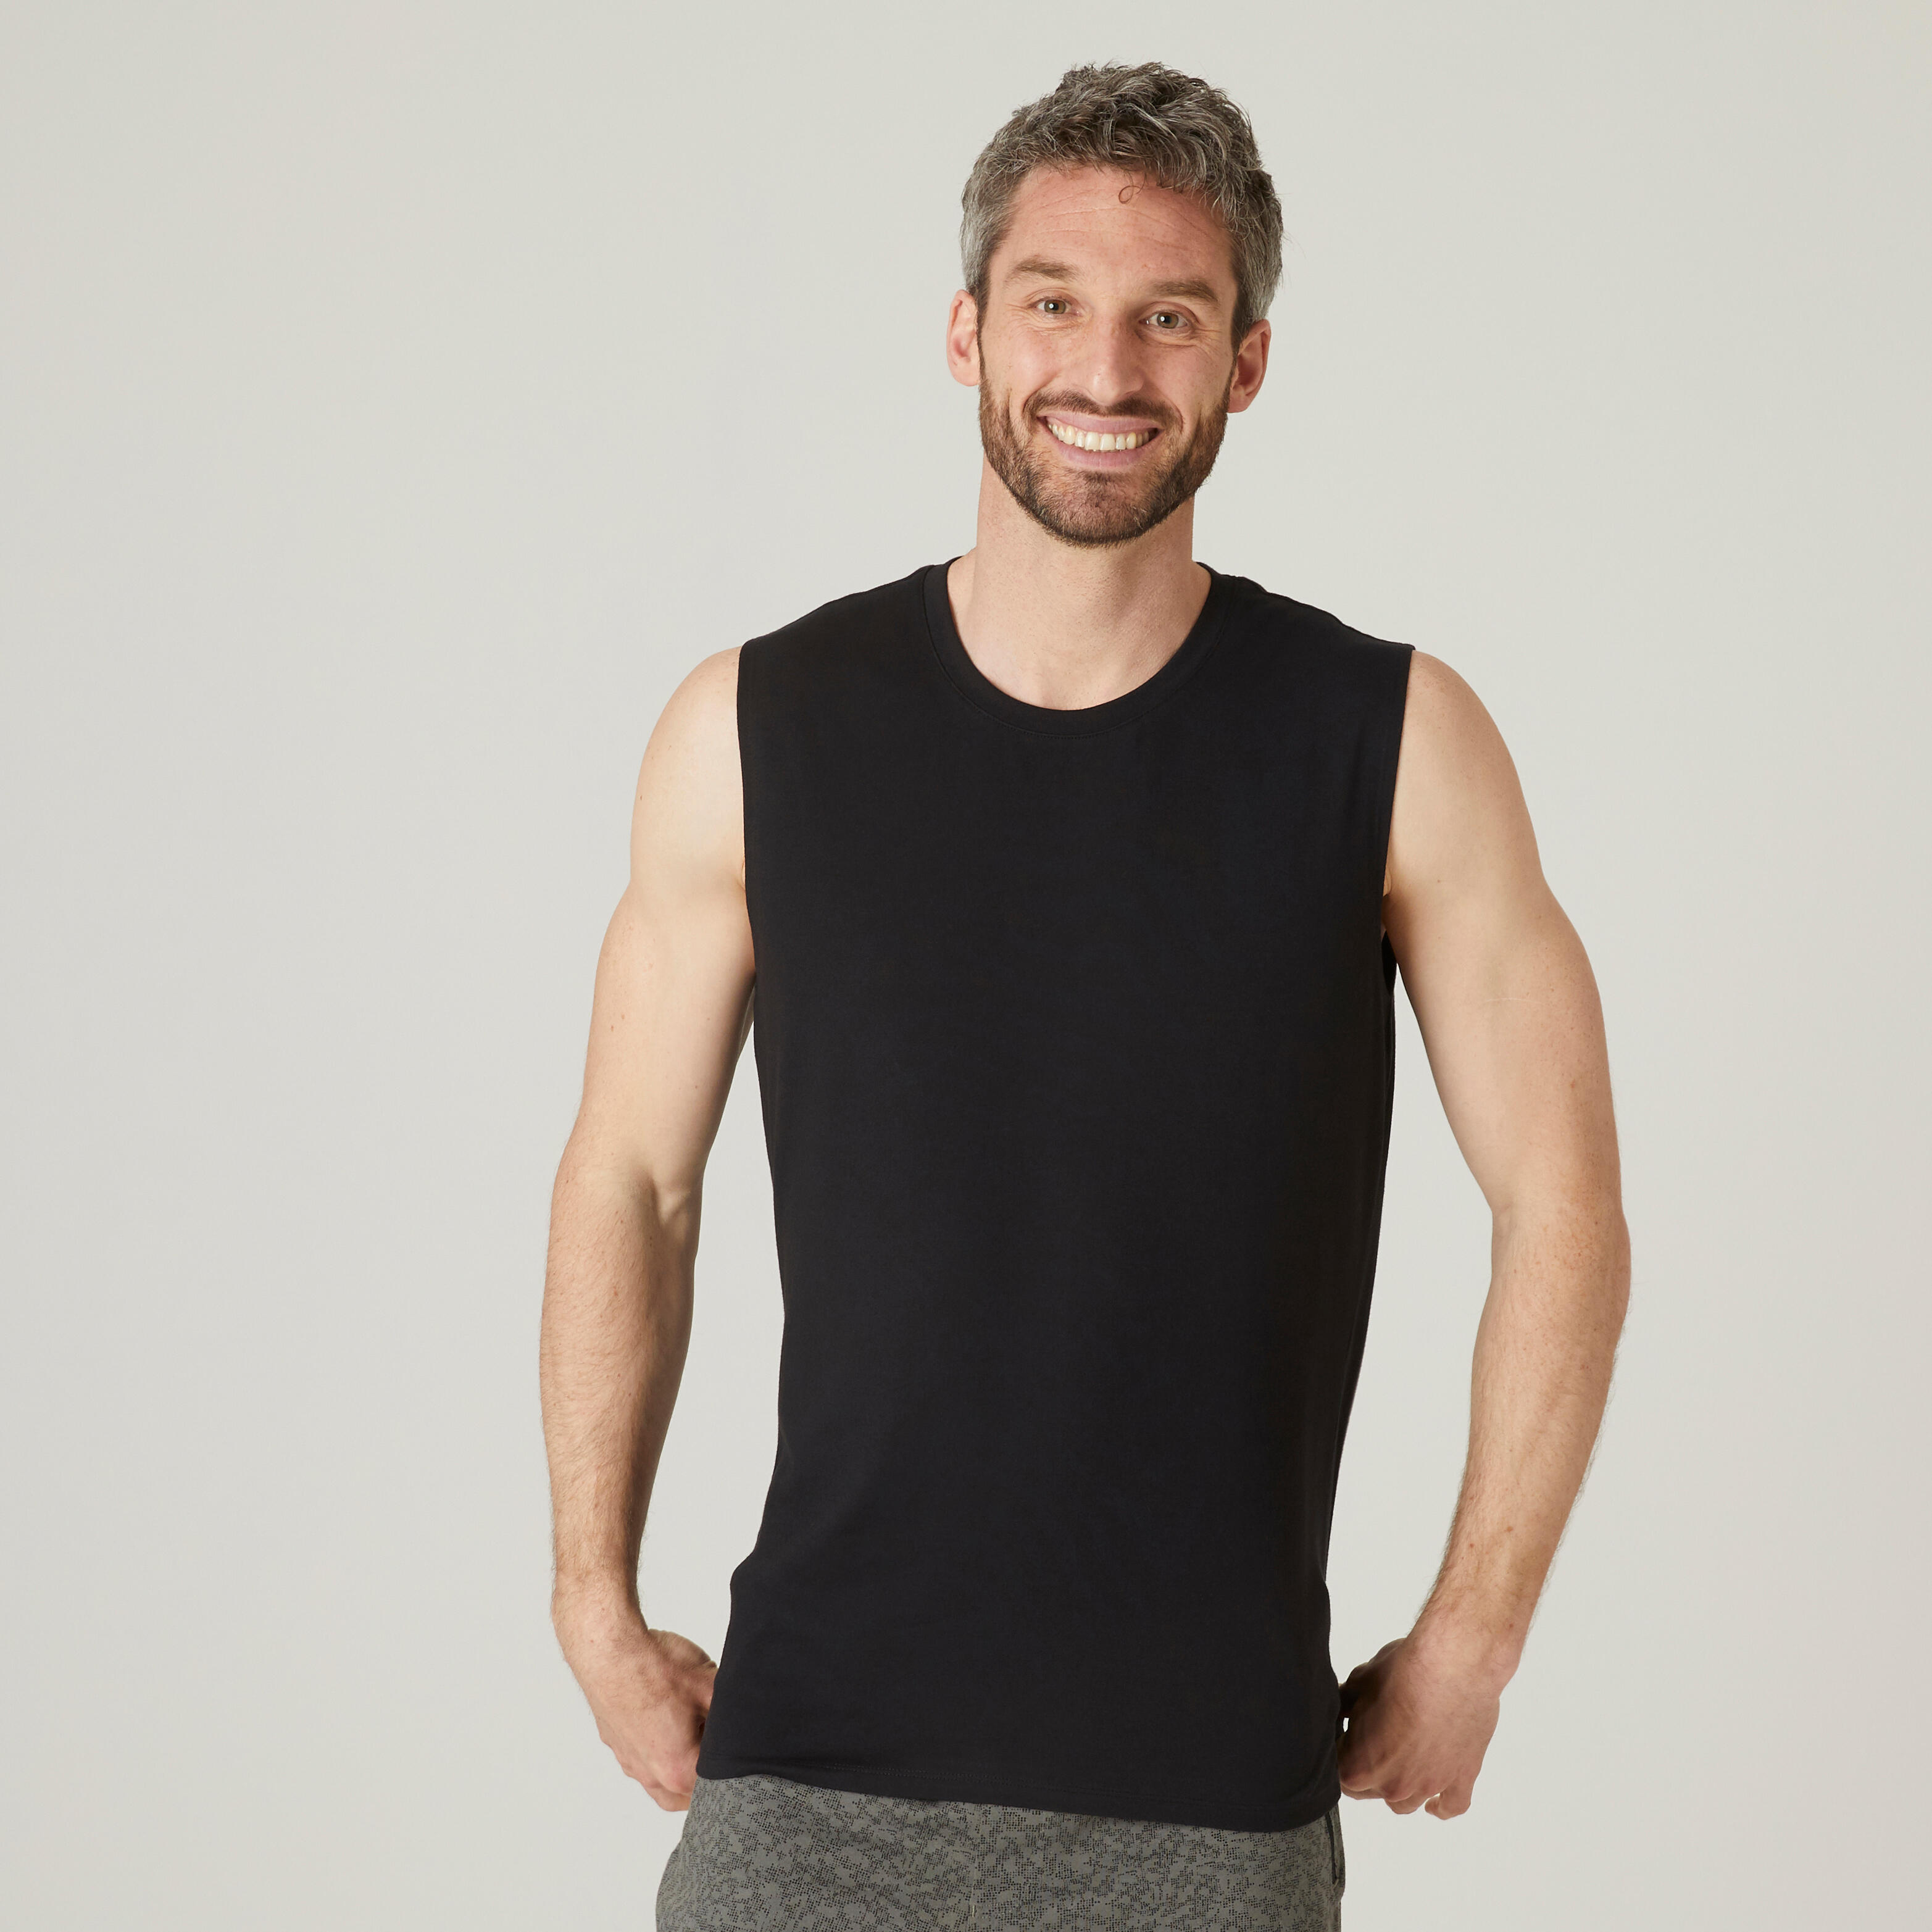 Sweatproof SWEET TANG Mens Sleeveless Vest T-Shirts Summer Top Tees Athletic Sportswear 